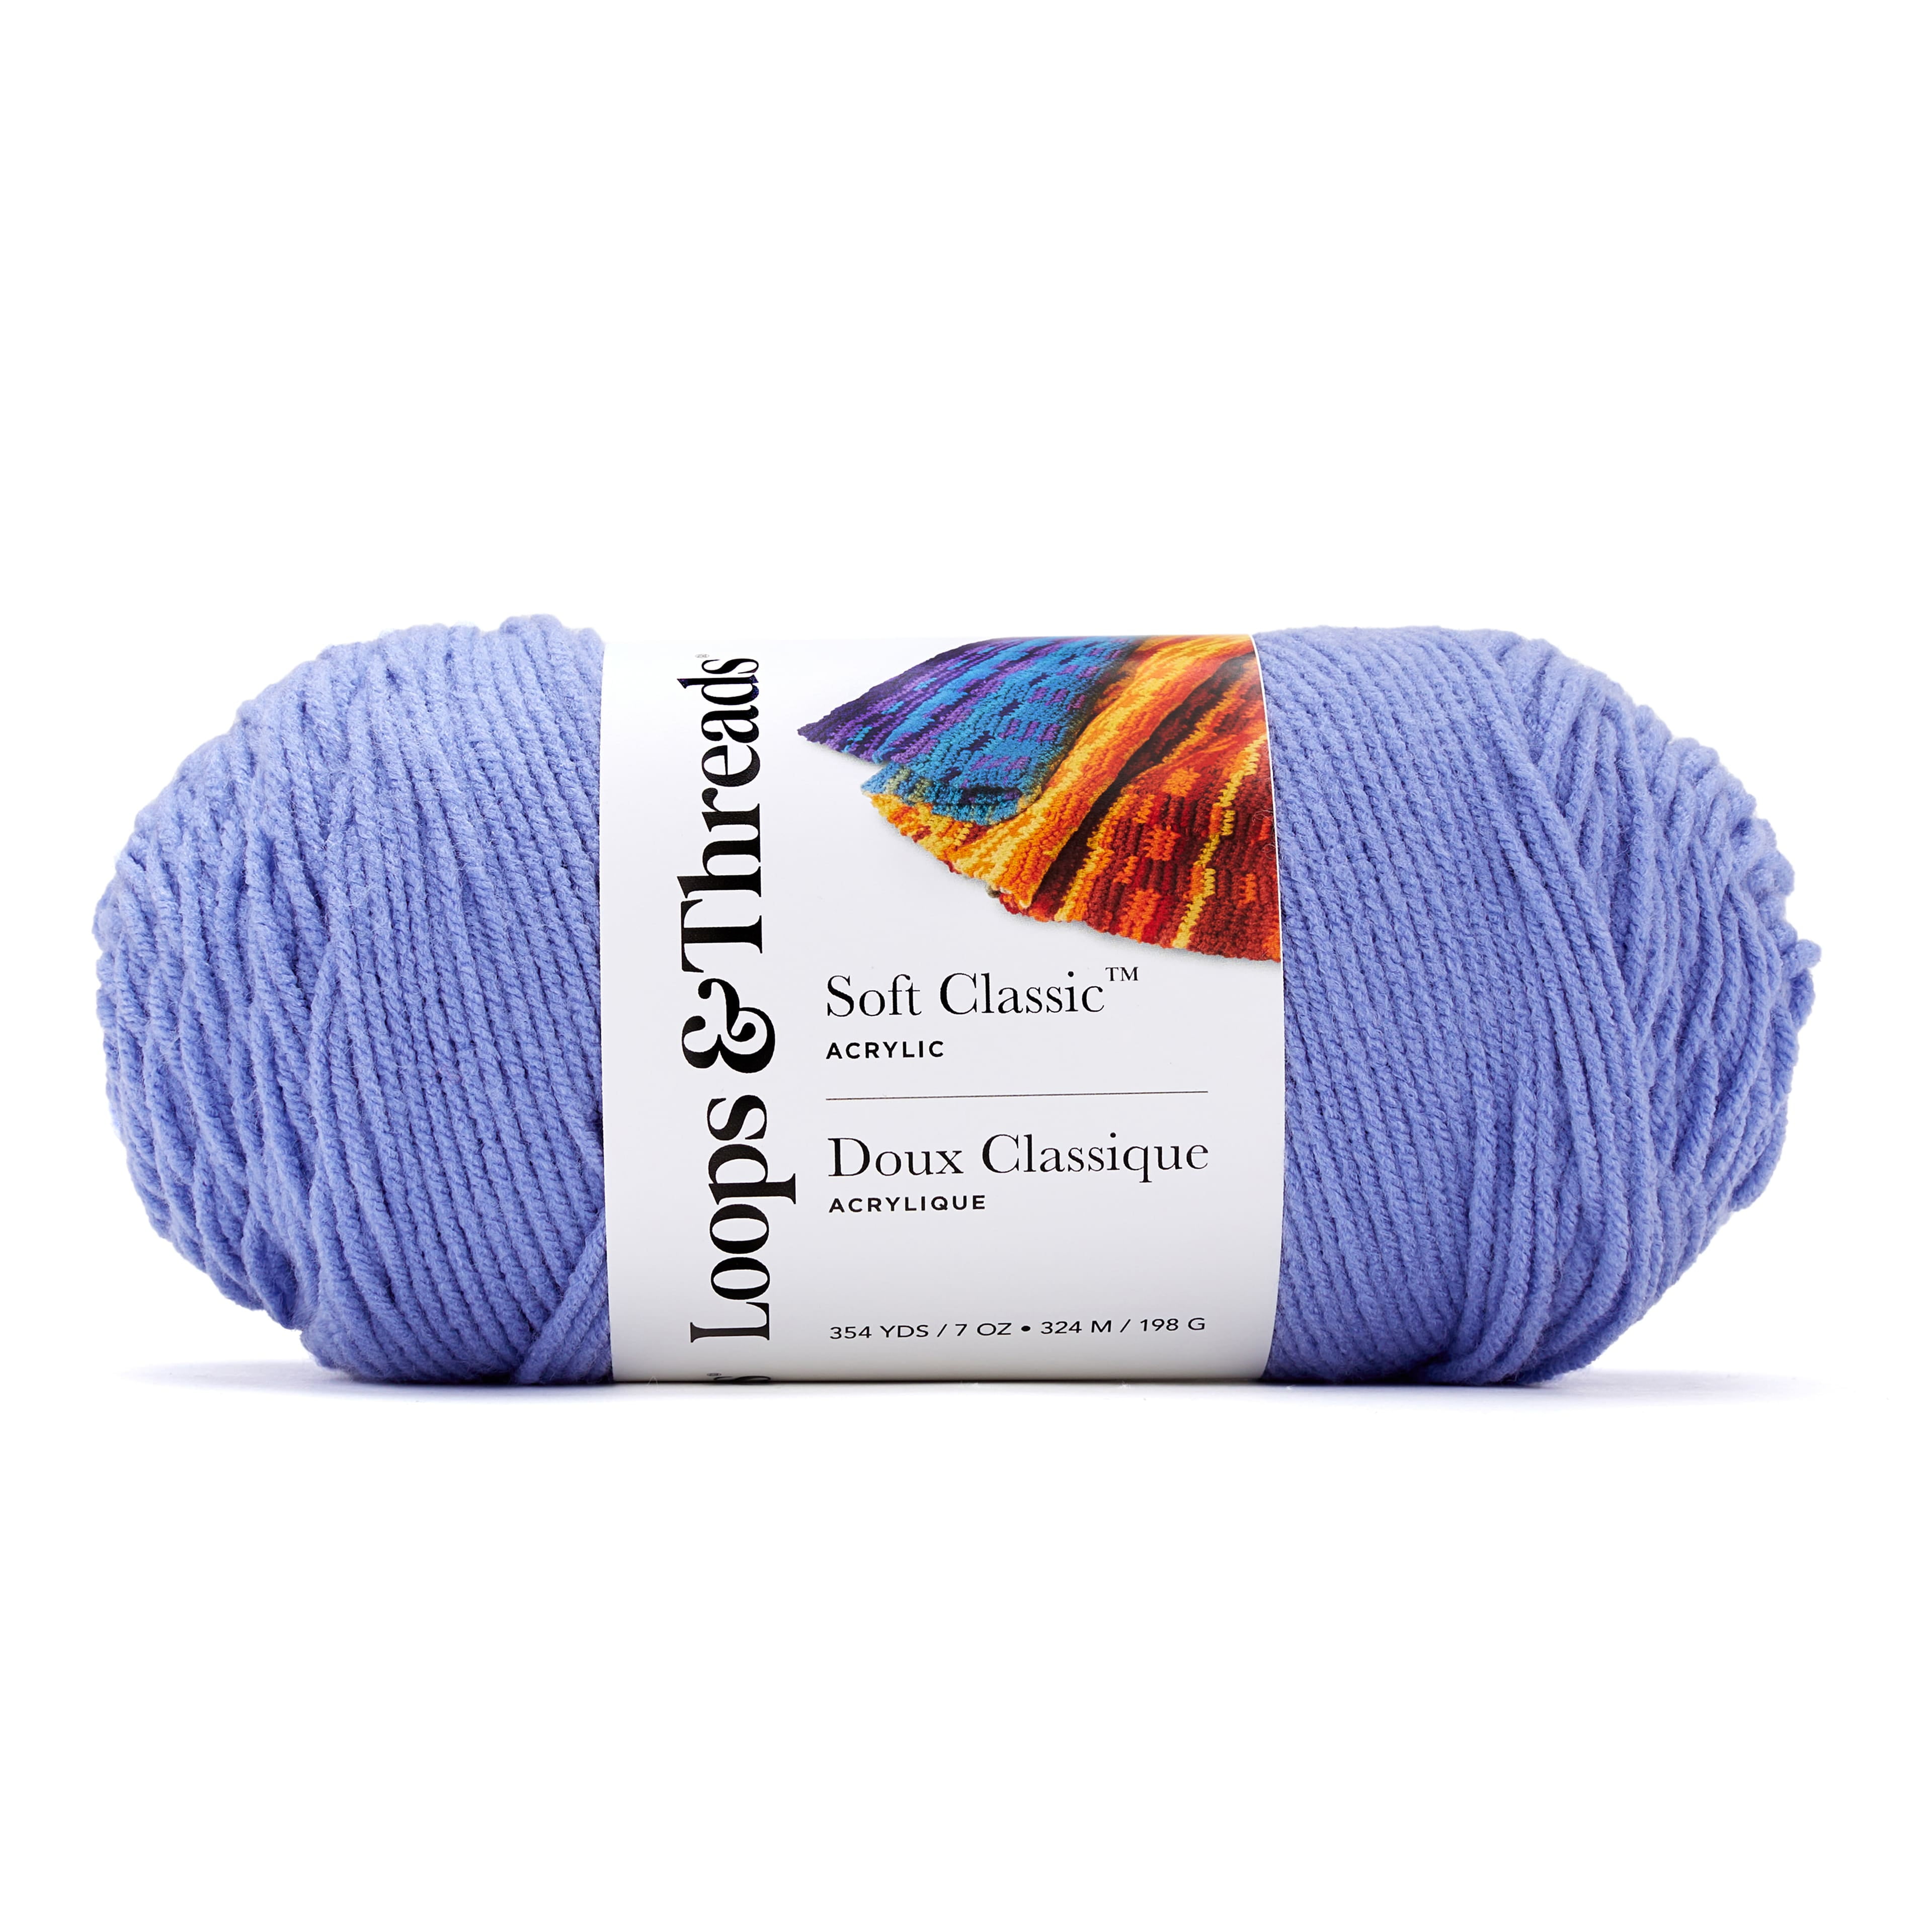 Multicolour Double Knit Wool Cotton Blend Soft Crochet Yarn Bundle Sewing  Crafts